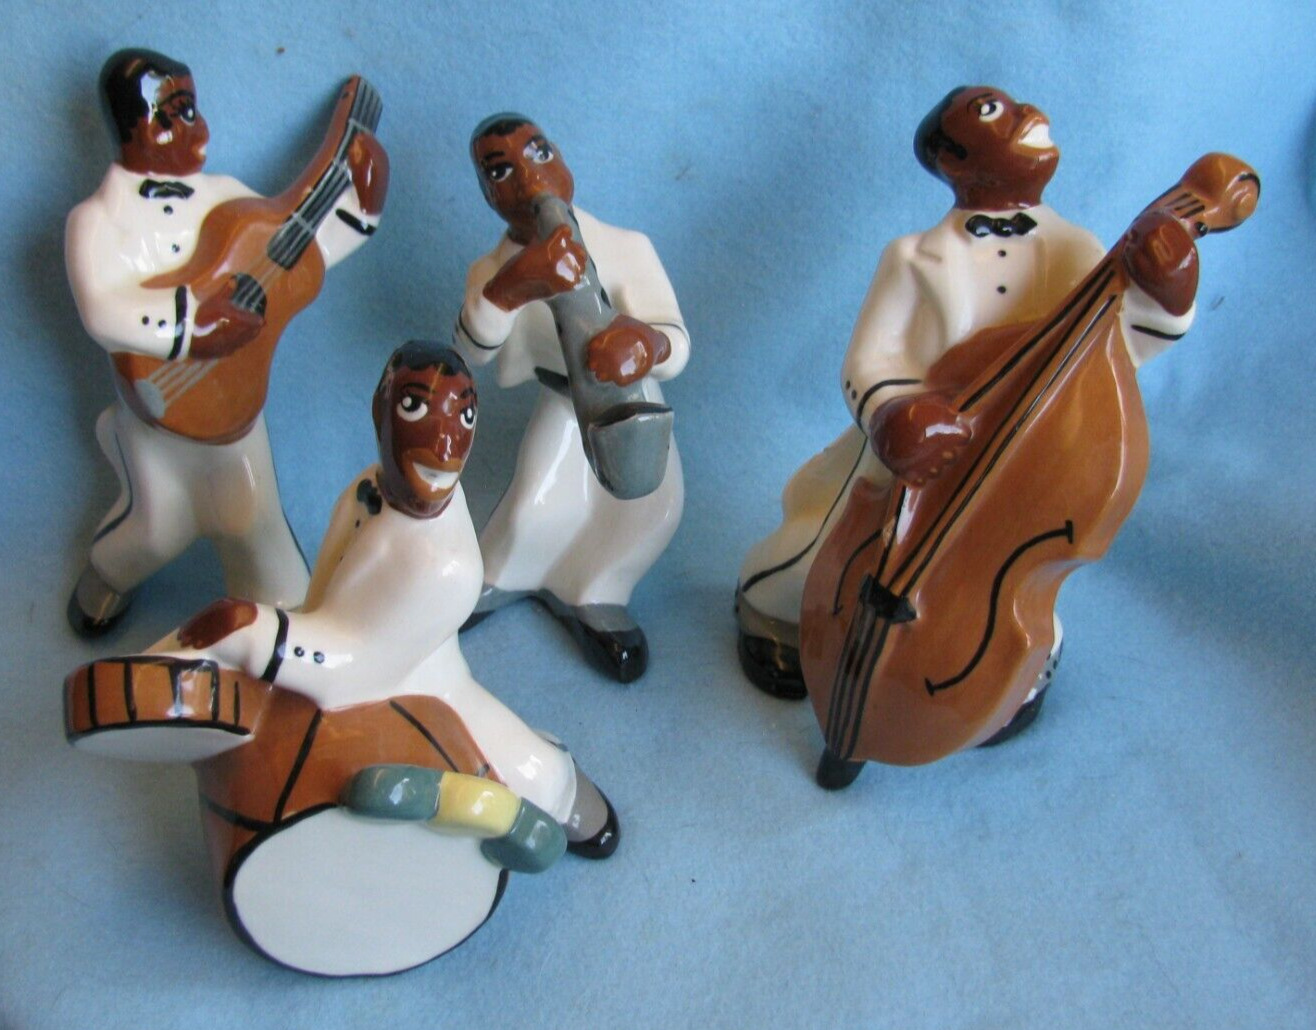 4 Vintage 1940s West Coast Pottery Black Jazz Musicians Figurines